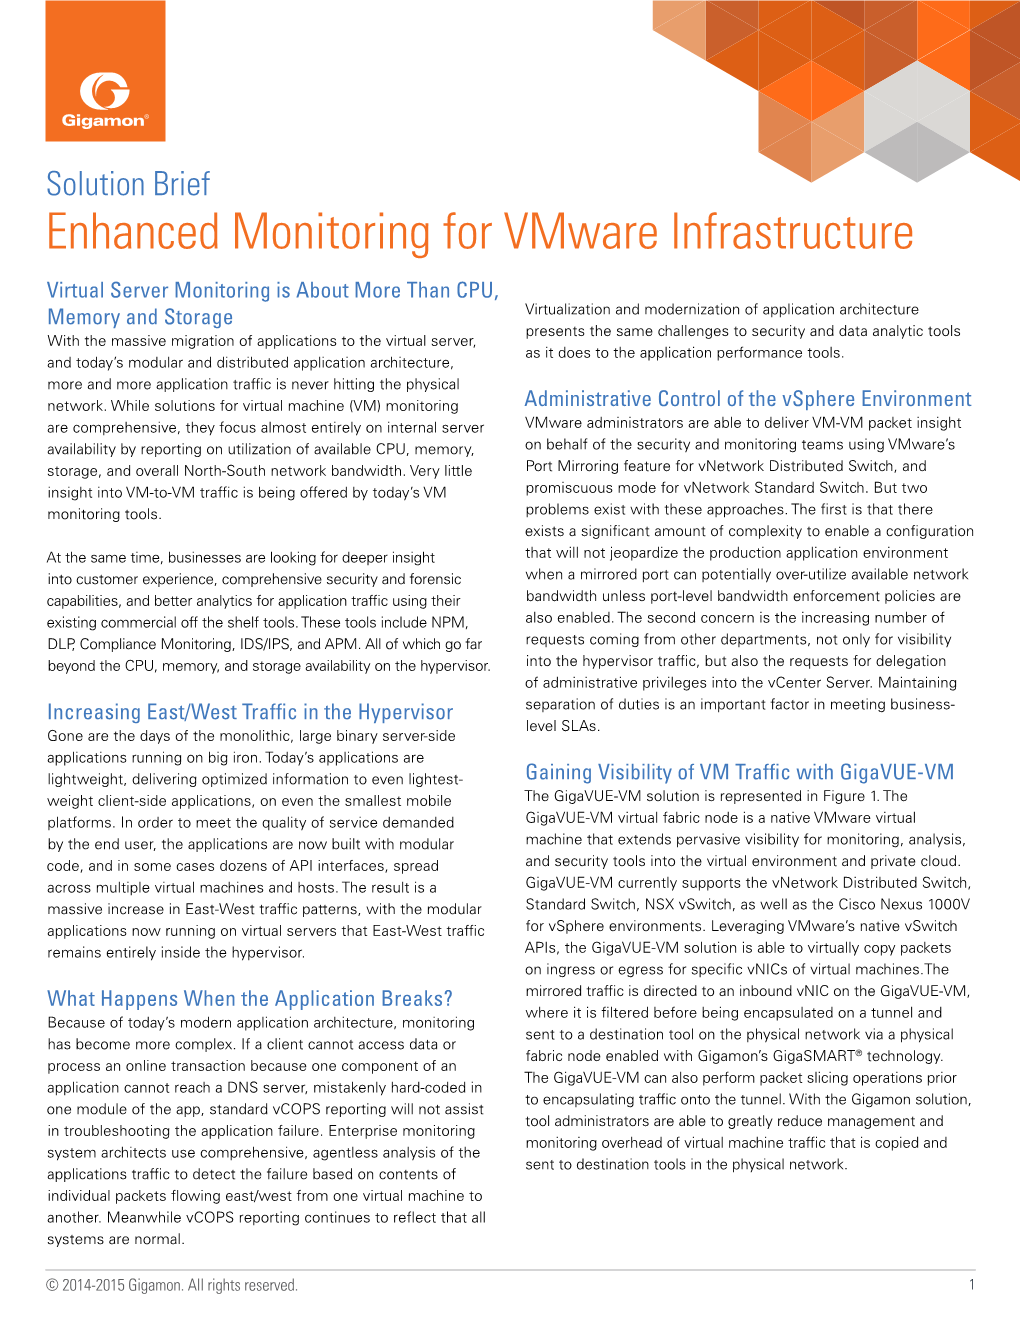 Enhanced Monitoring for Vmware Infrastructure